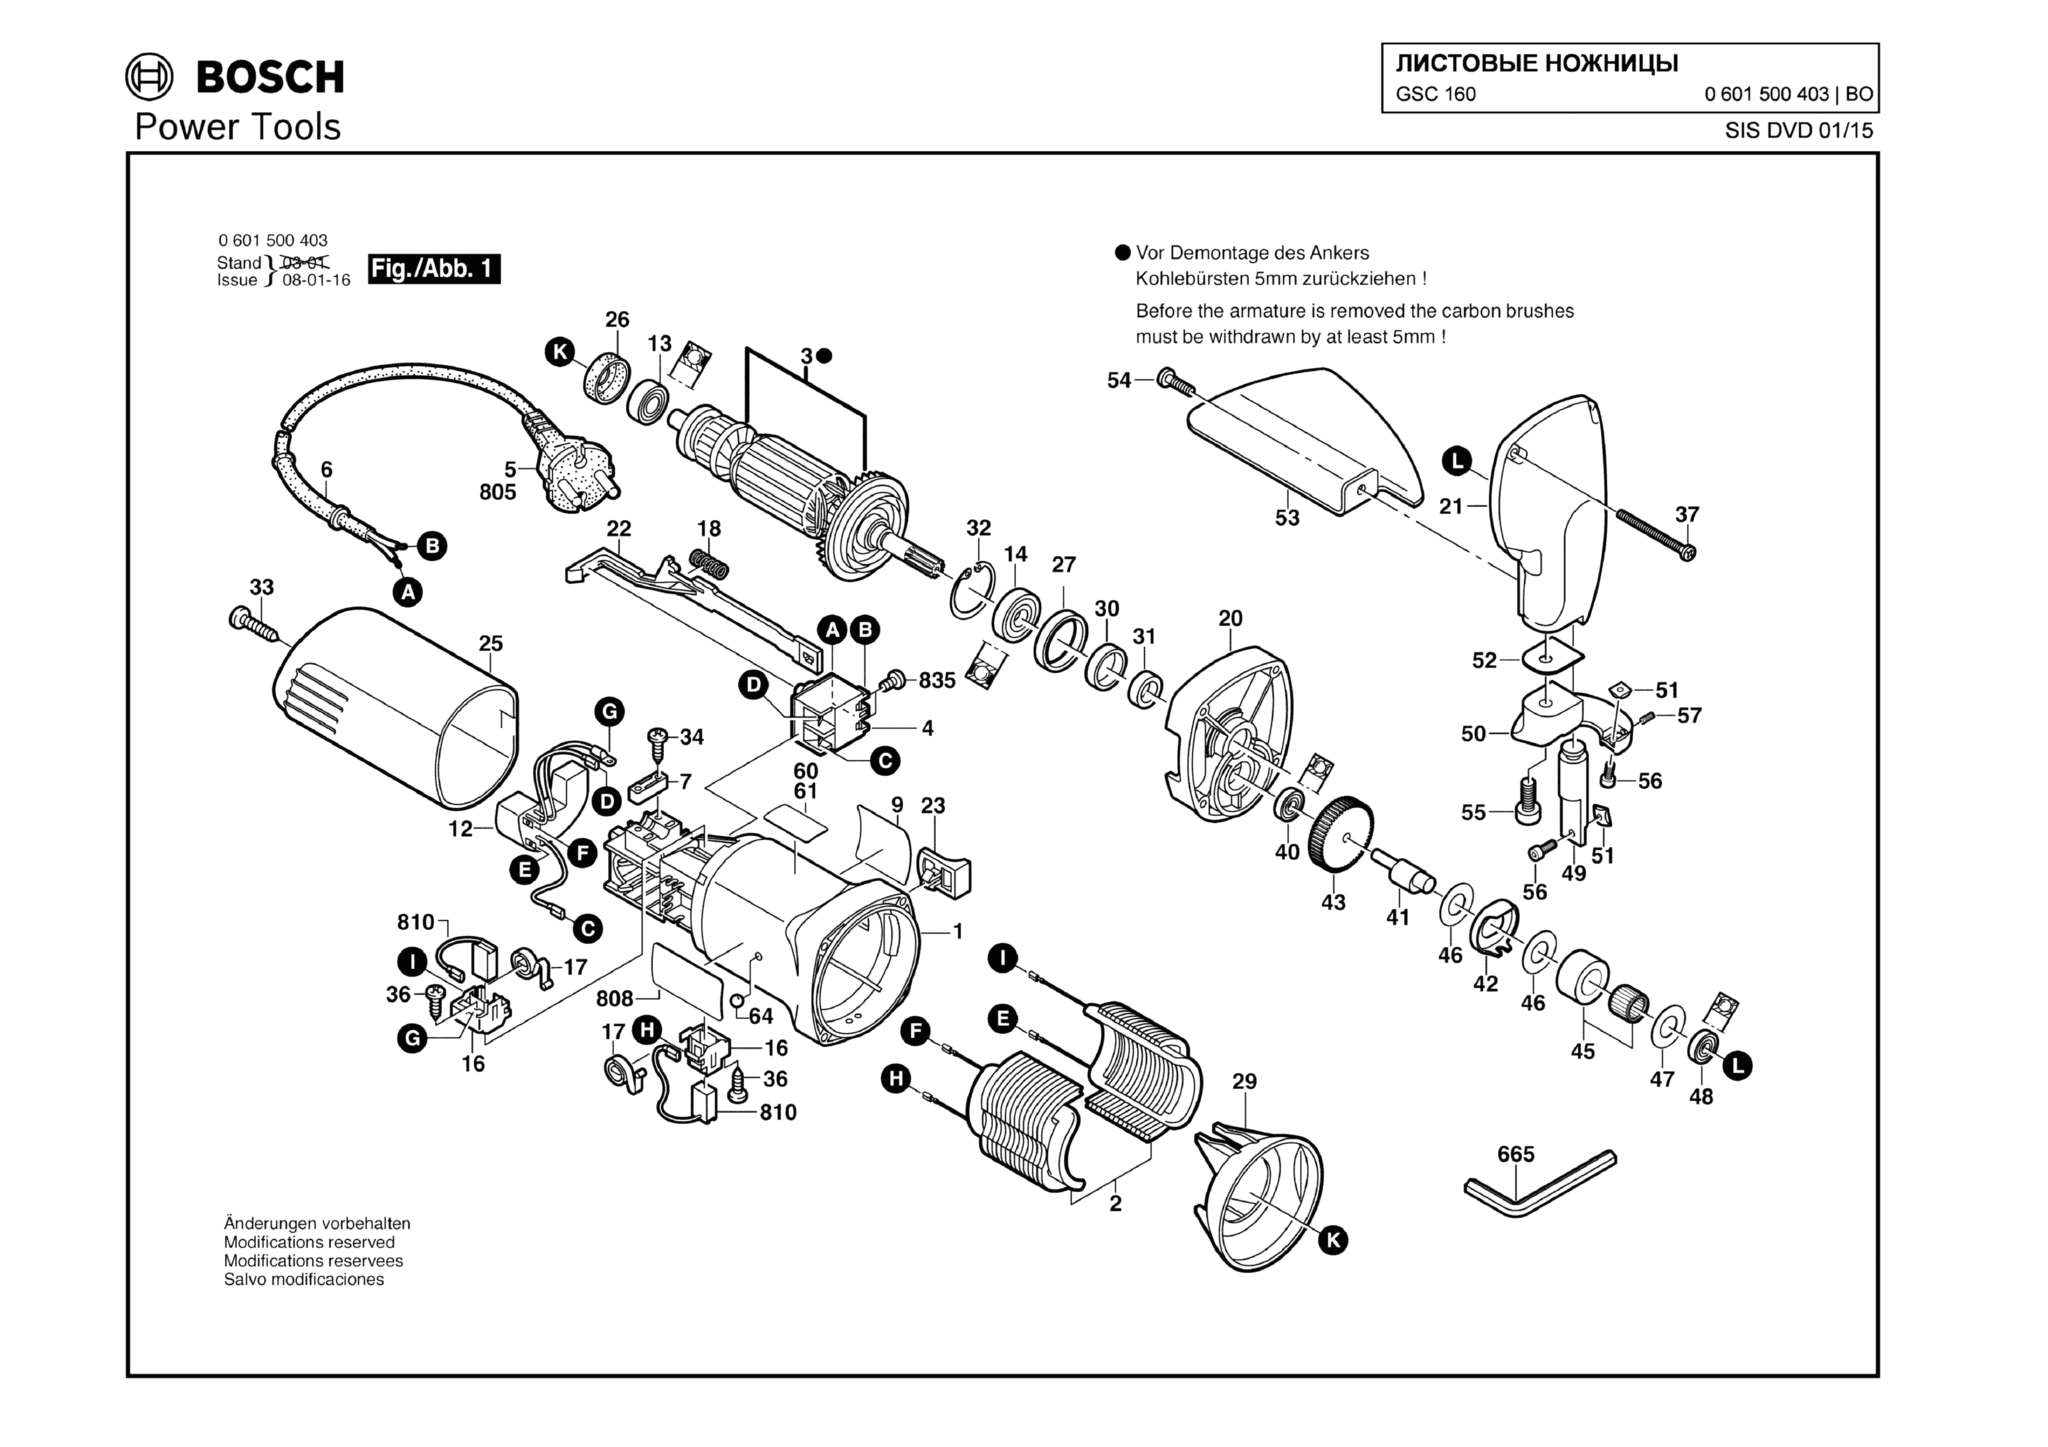 Запчасти, схема и деталировка Bosch GSC 160 (ТИП 0601500403)